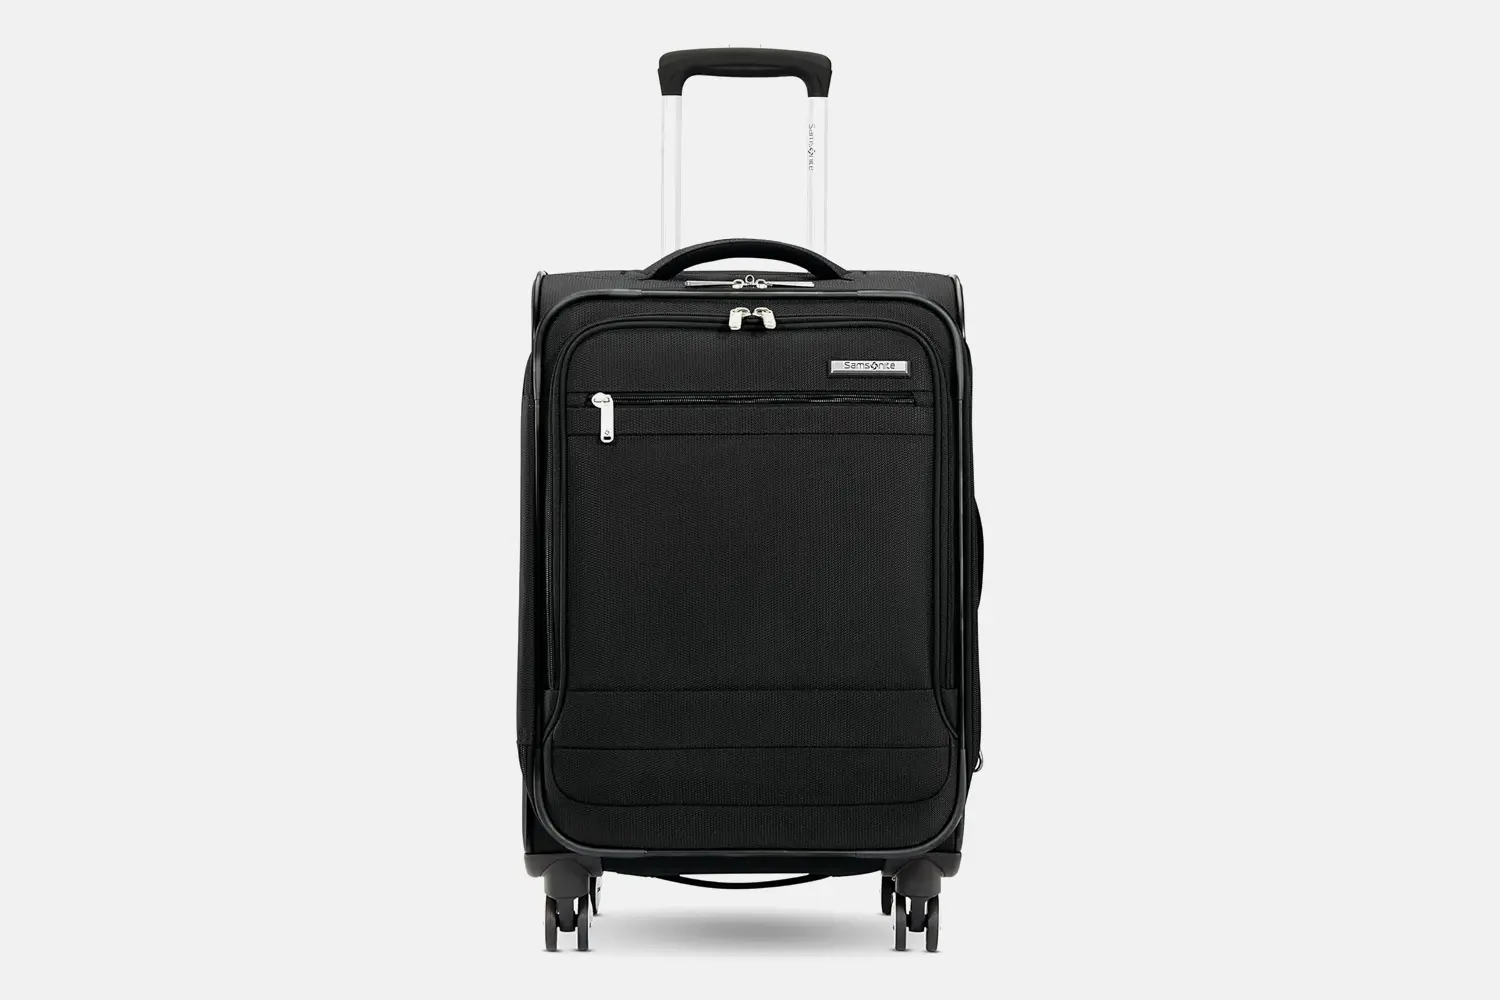 Samsonite Aspire DLX Carry-on Luggage